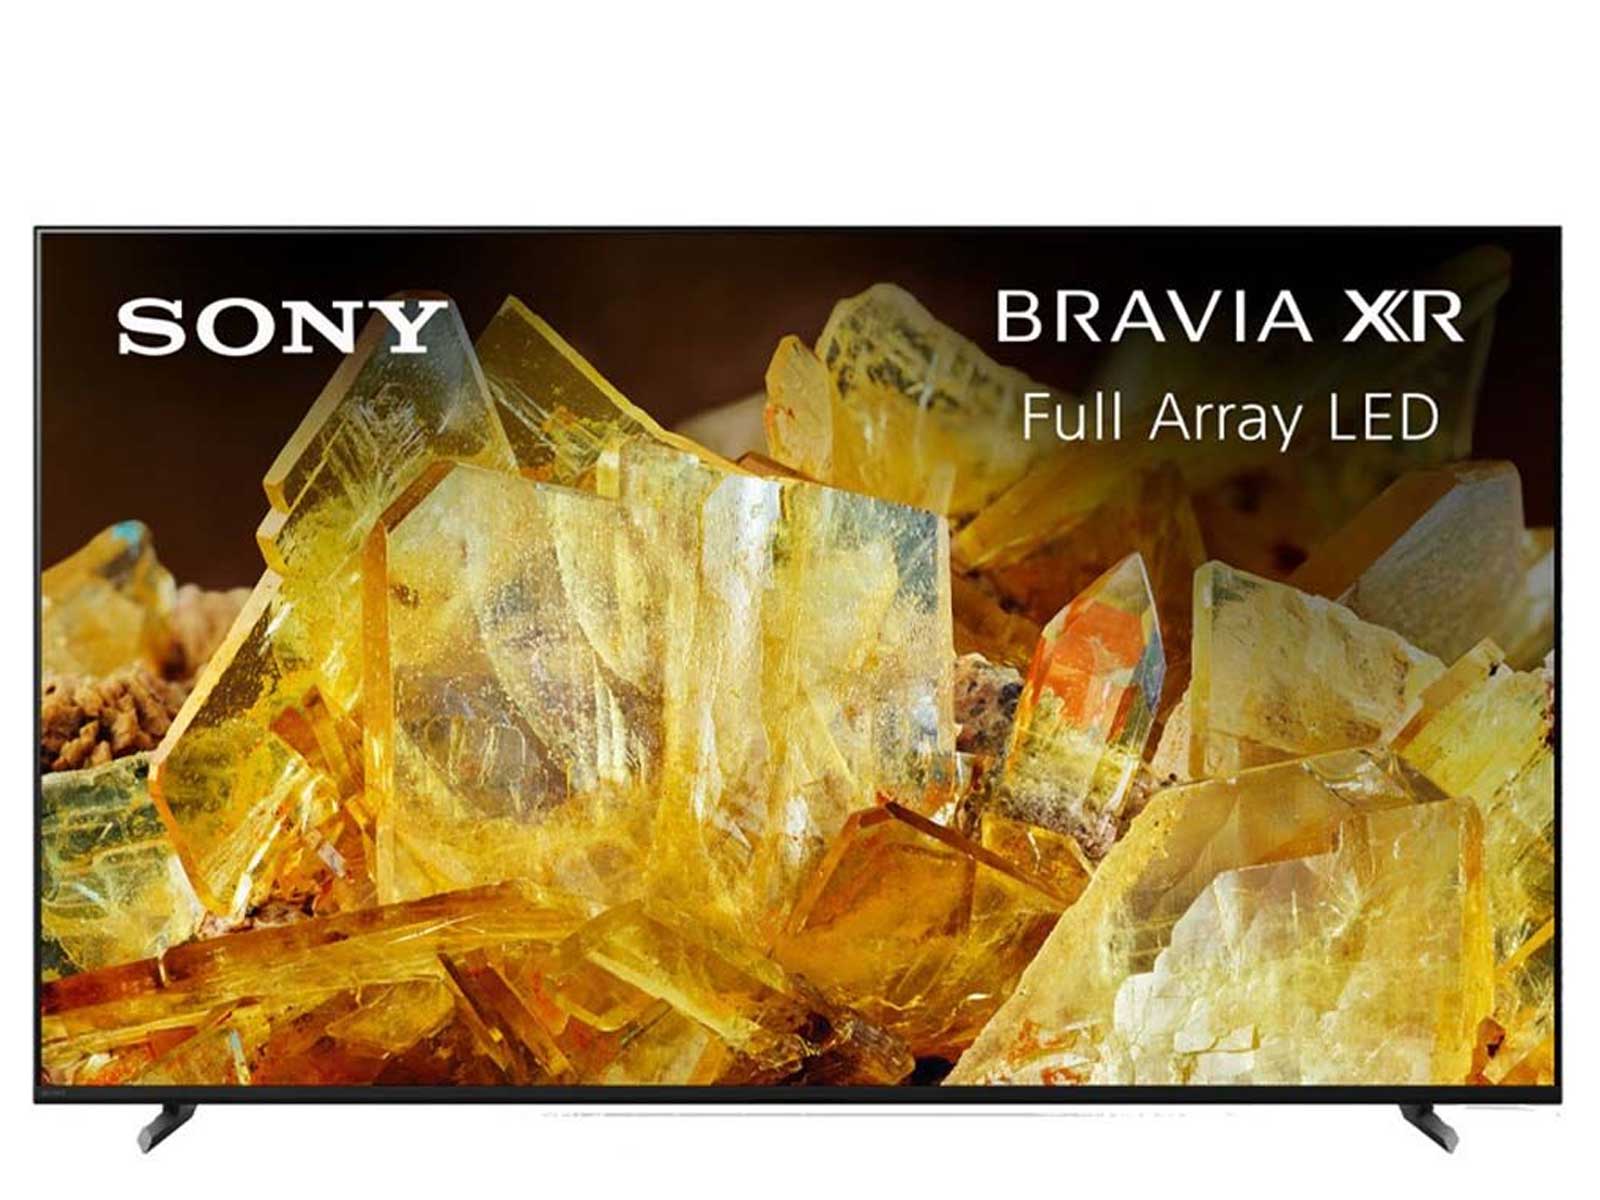 Sony BRAVIA XR X90L<br />
